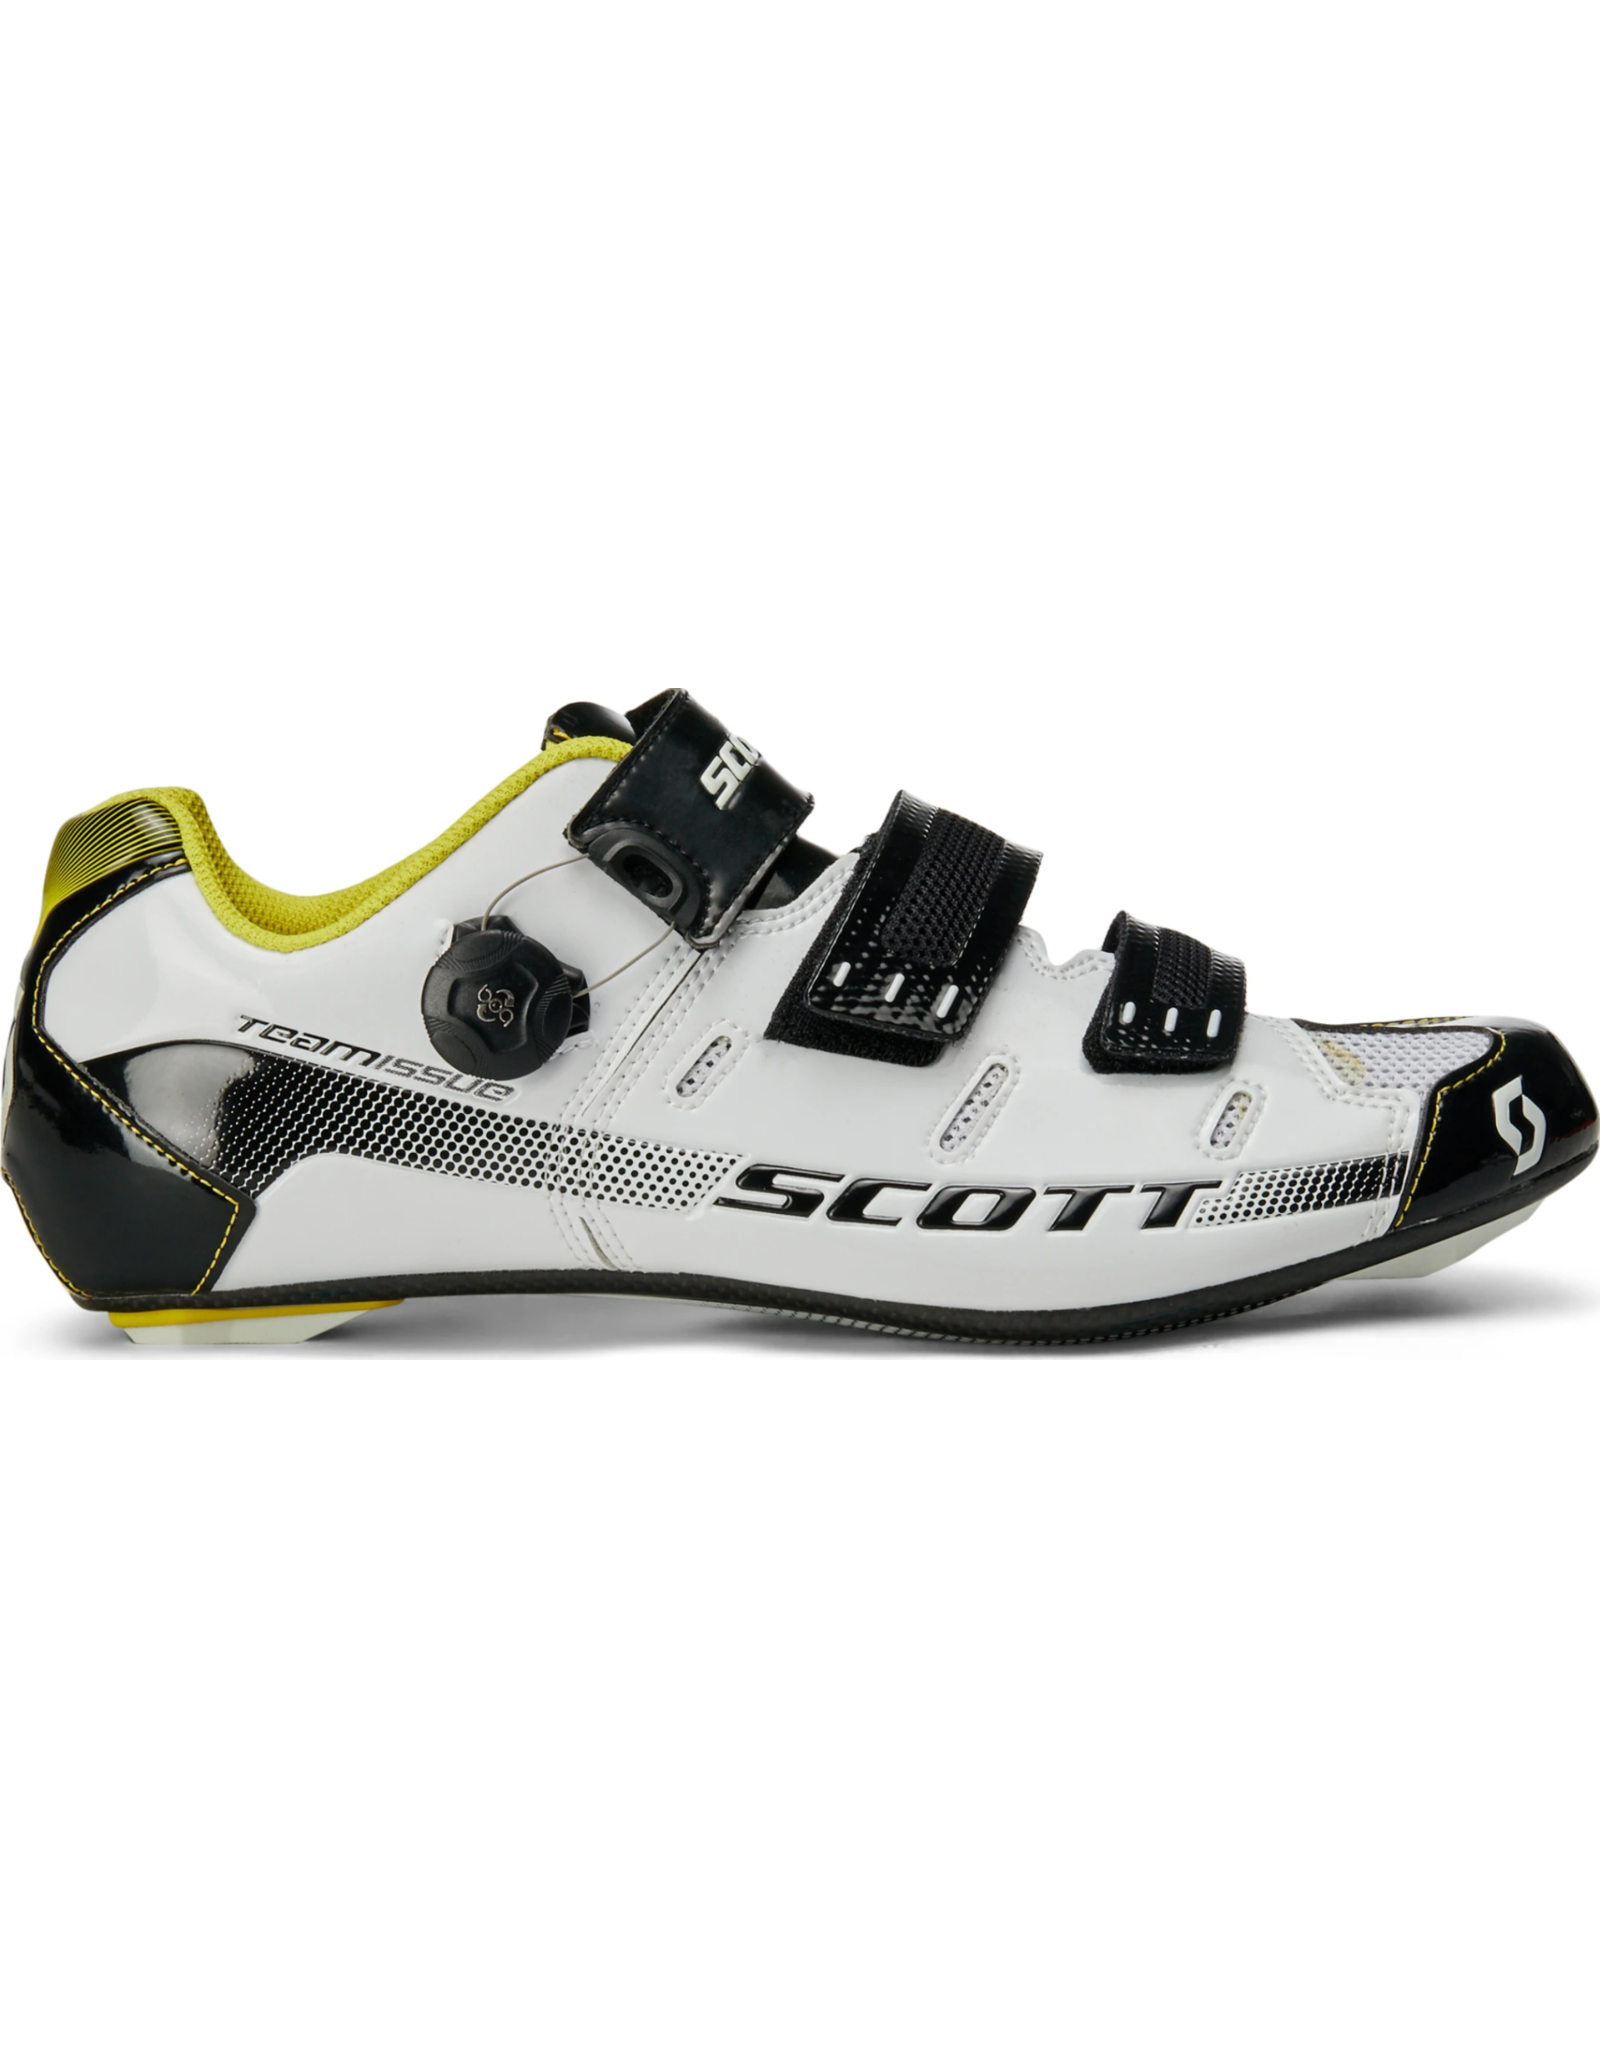 SCOTT SIZES 42 AND 46 ONLY - SCOTT MEN'S BIKE FOOTWEAR -Road Team Issue